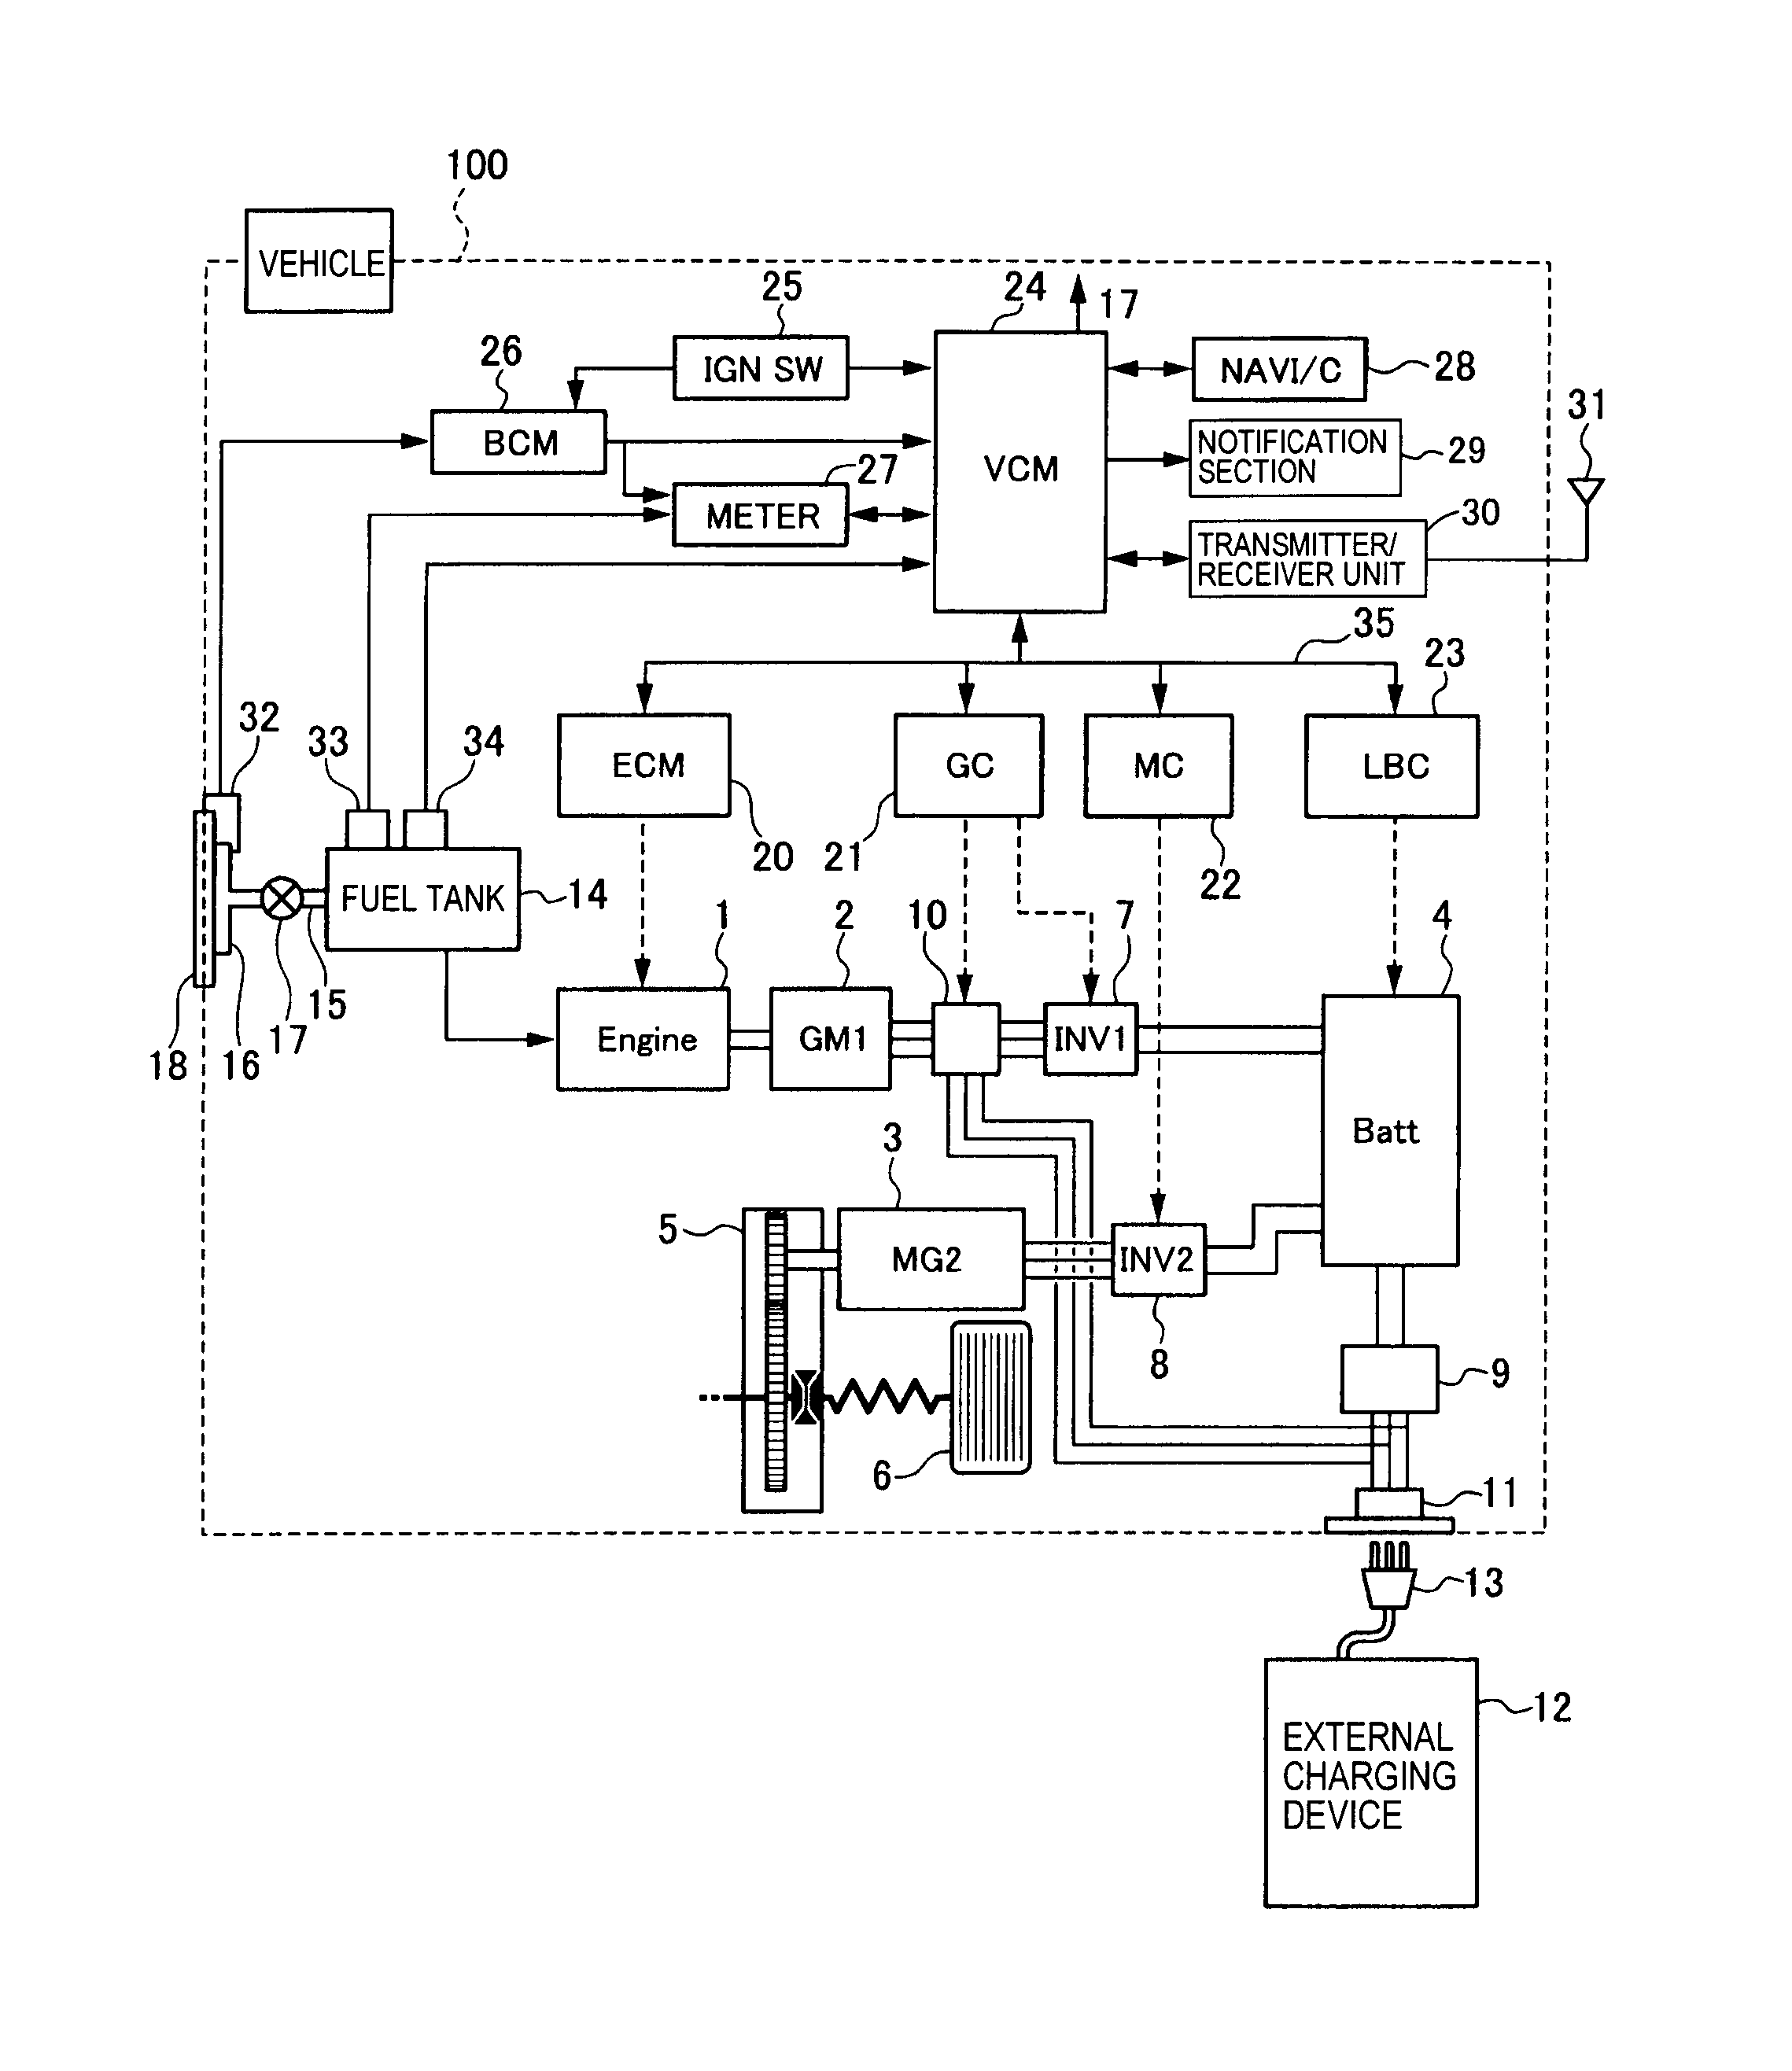 emachine motherboard diagram